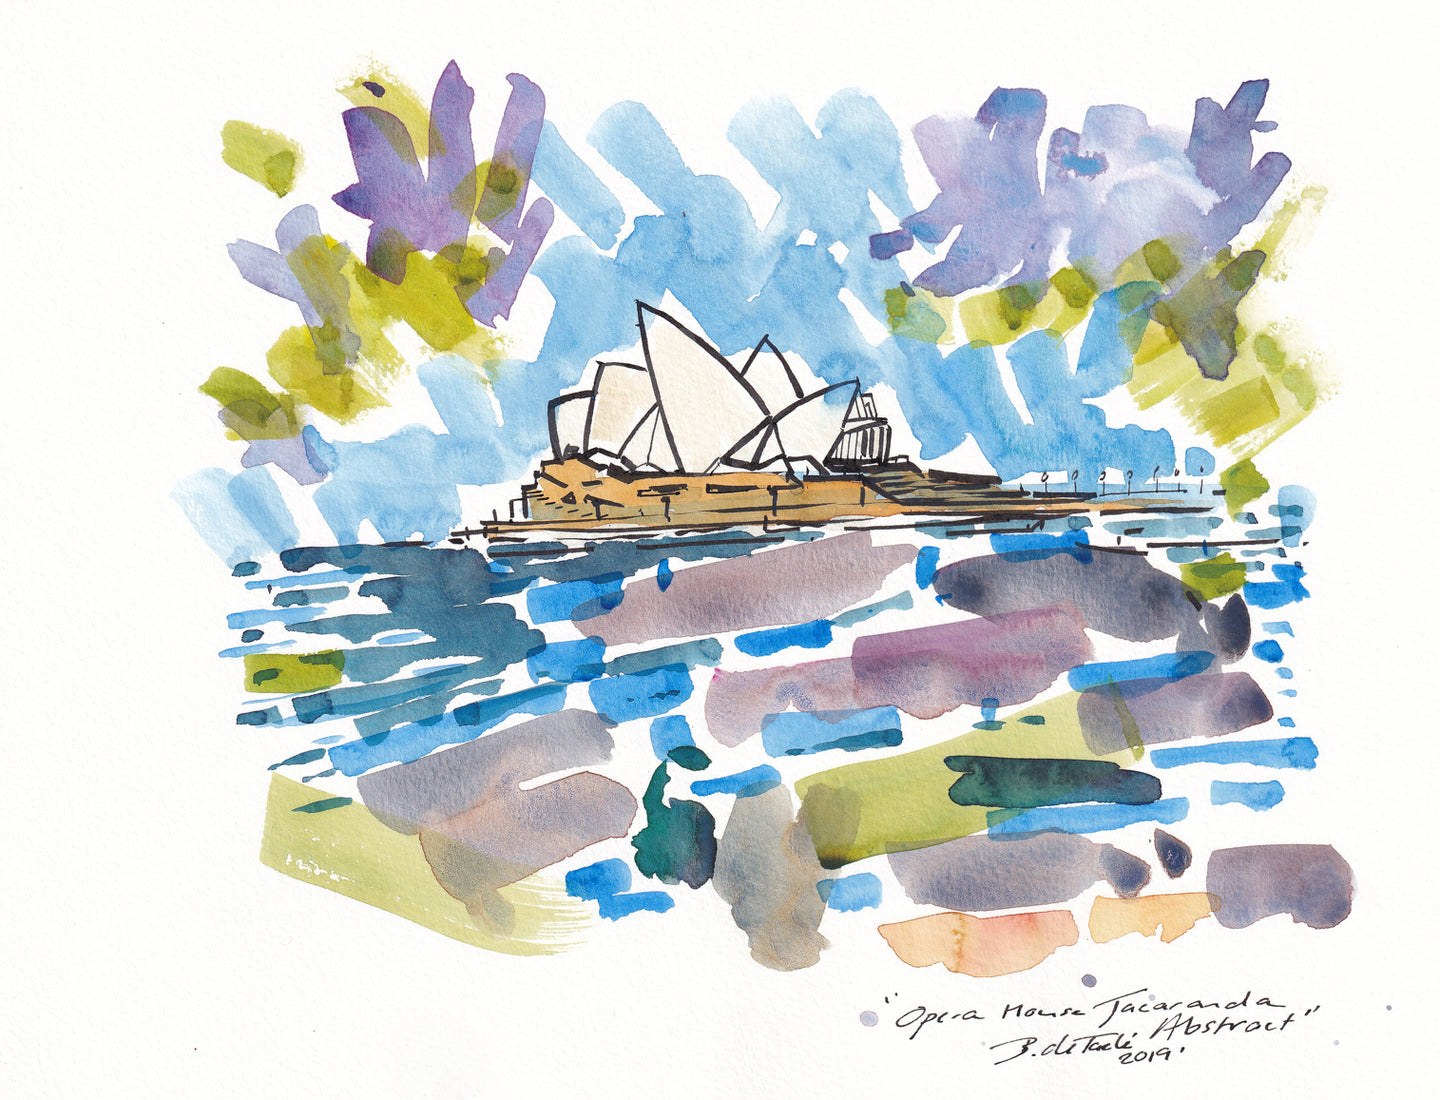 Sydney Opera House Jacaranda Abstract